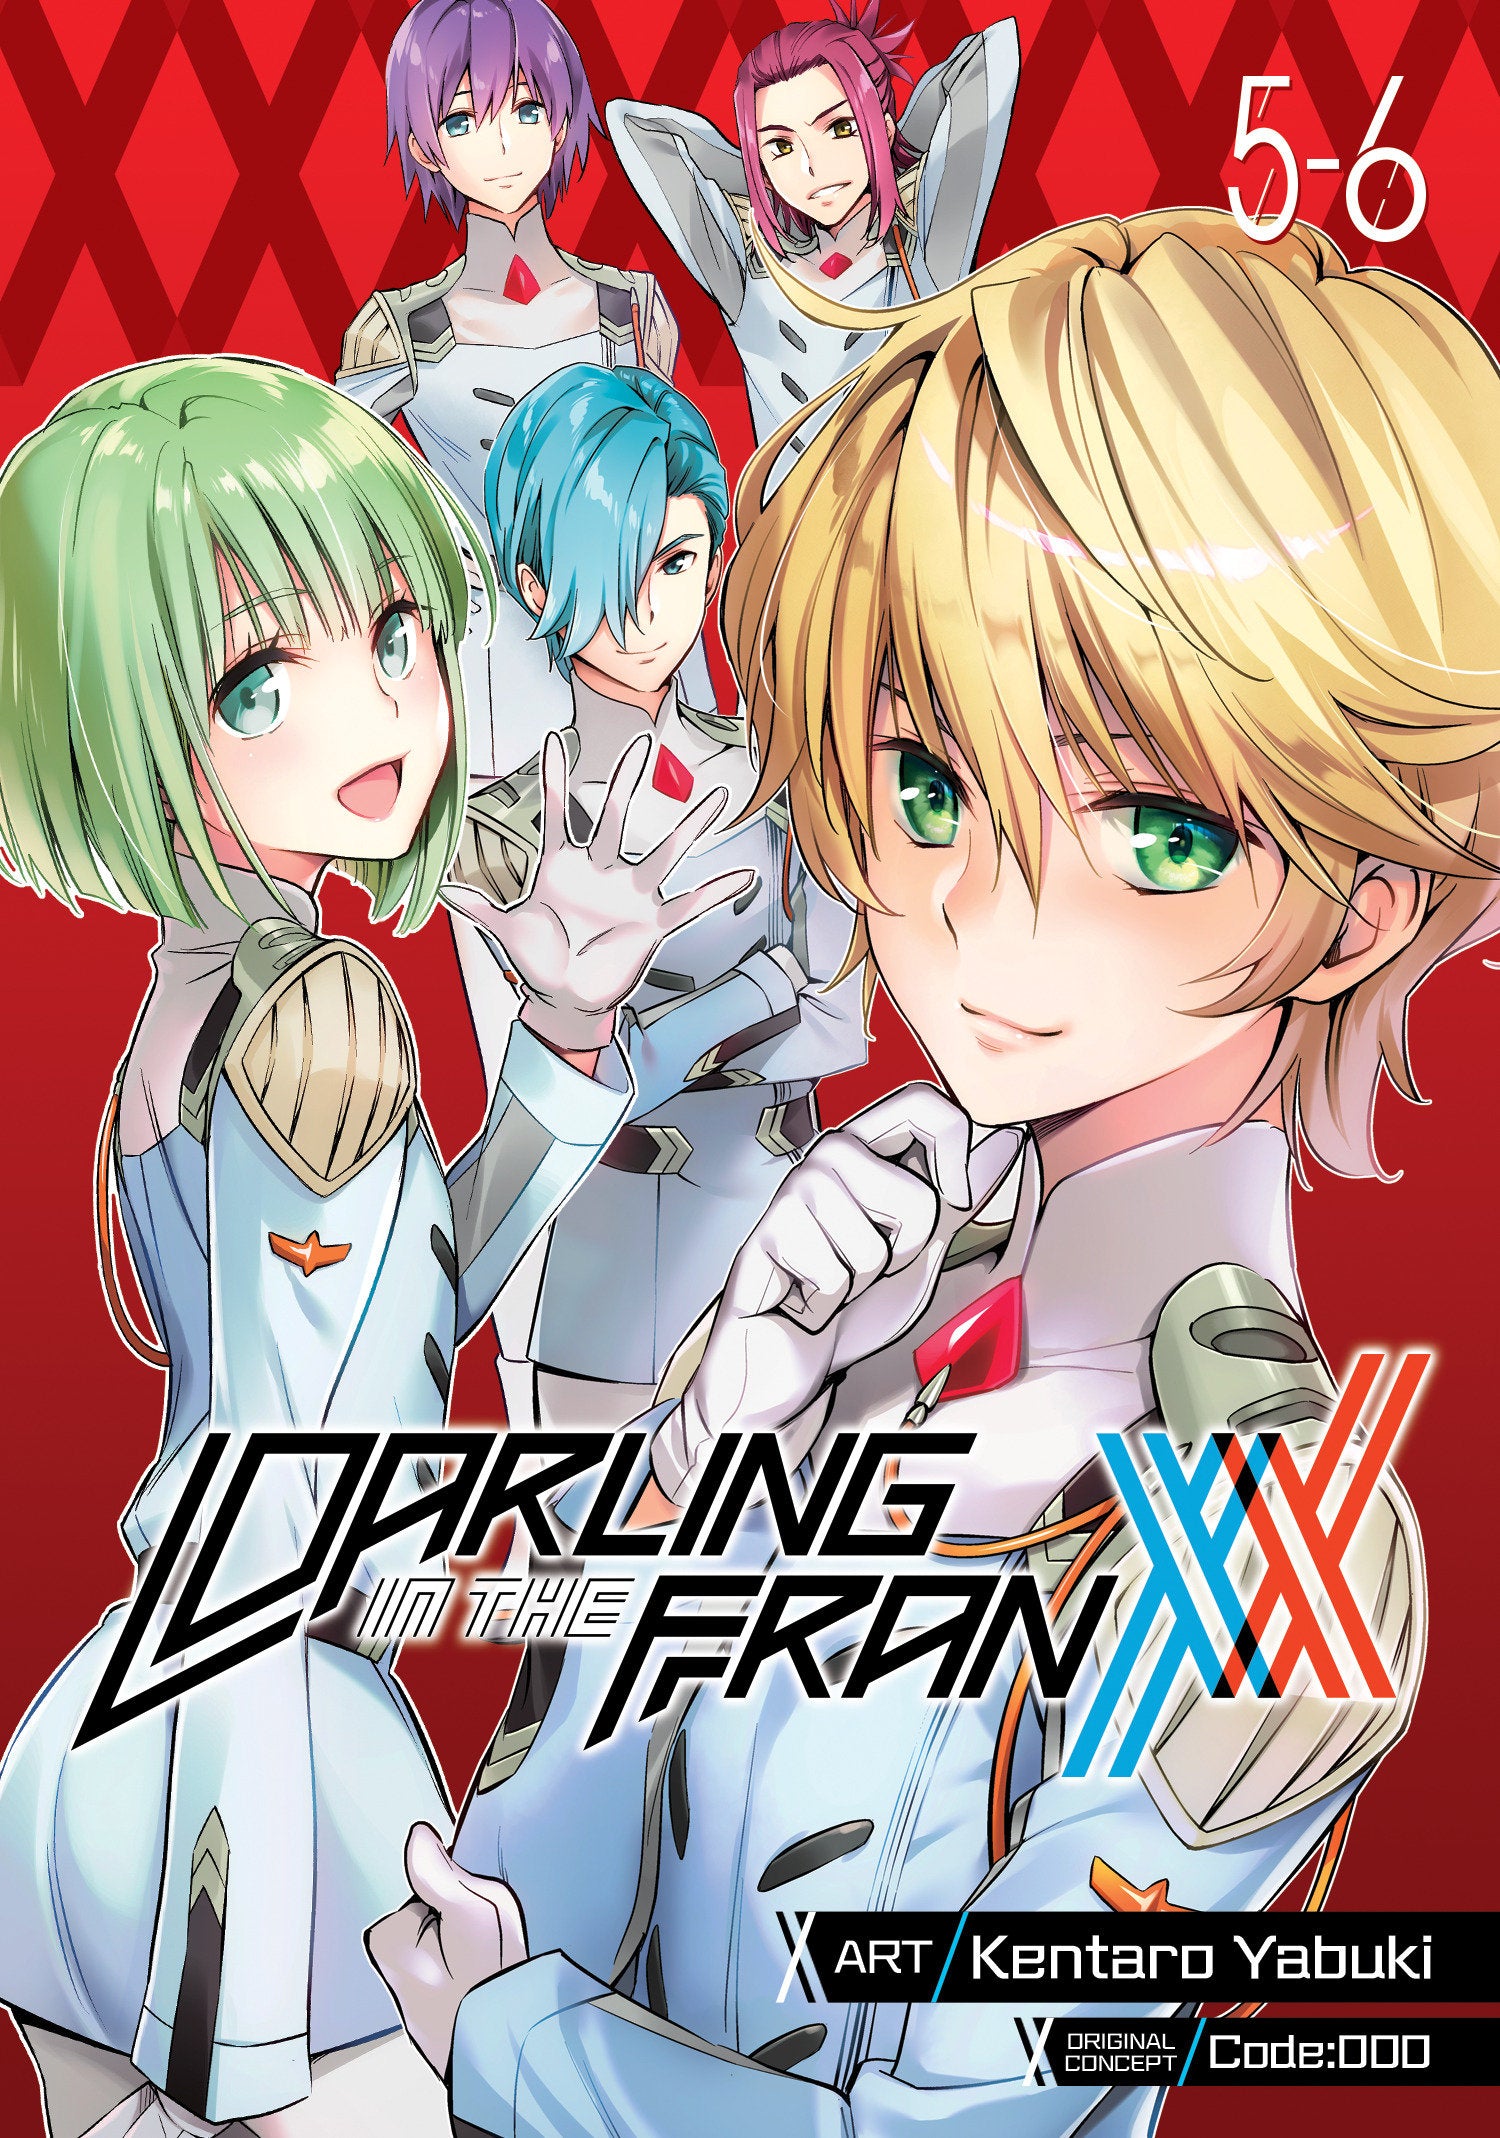 Darling in the Franxx Vol. 05-06